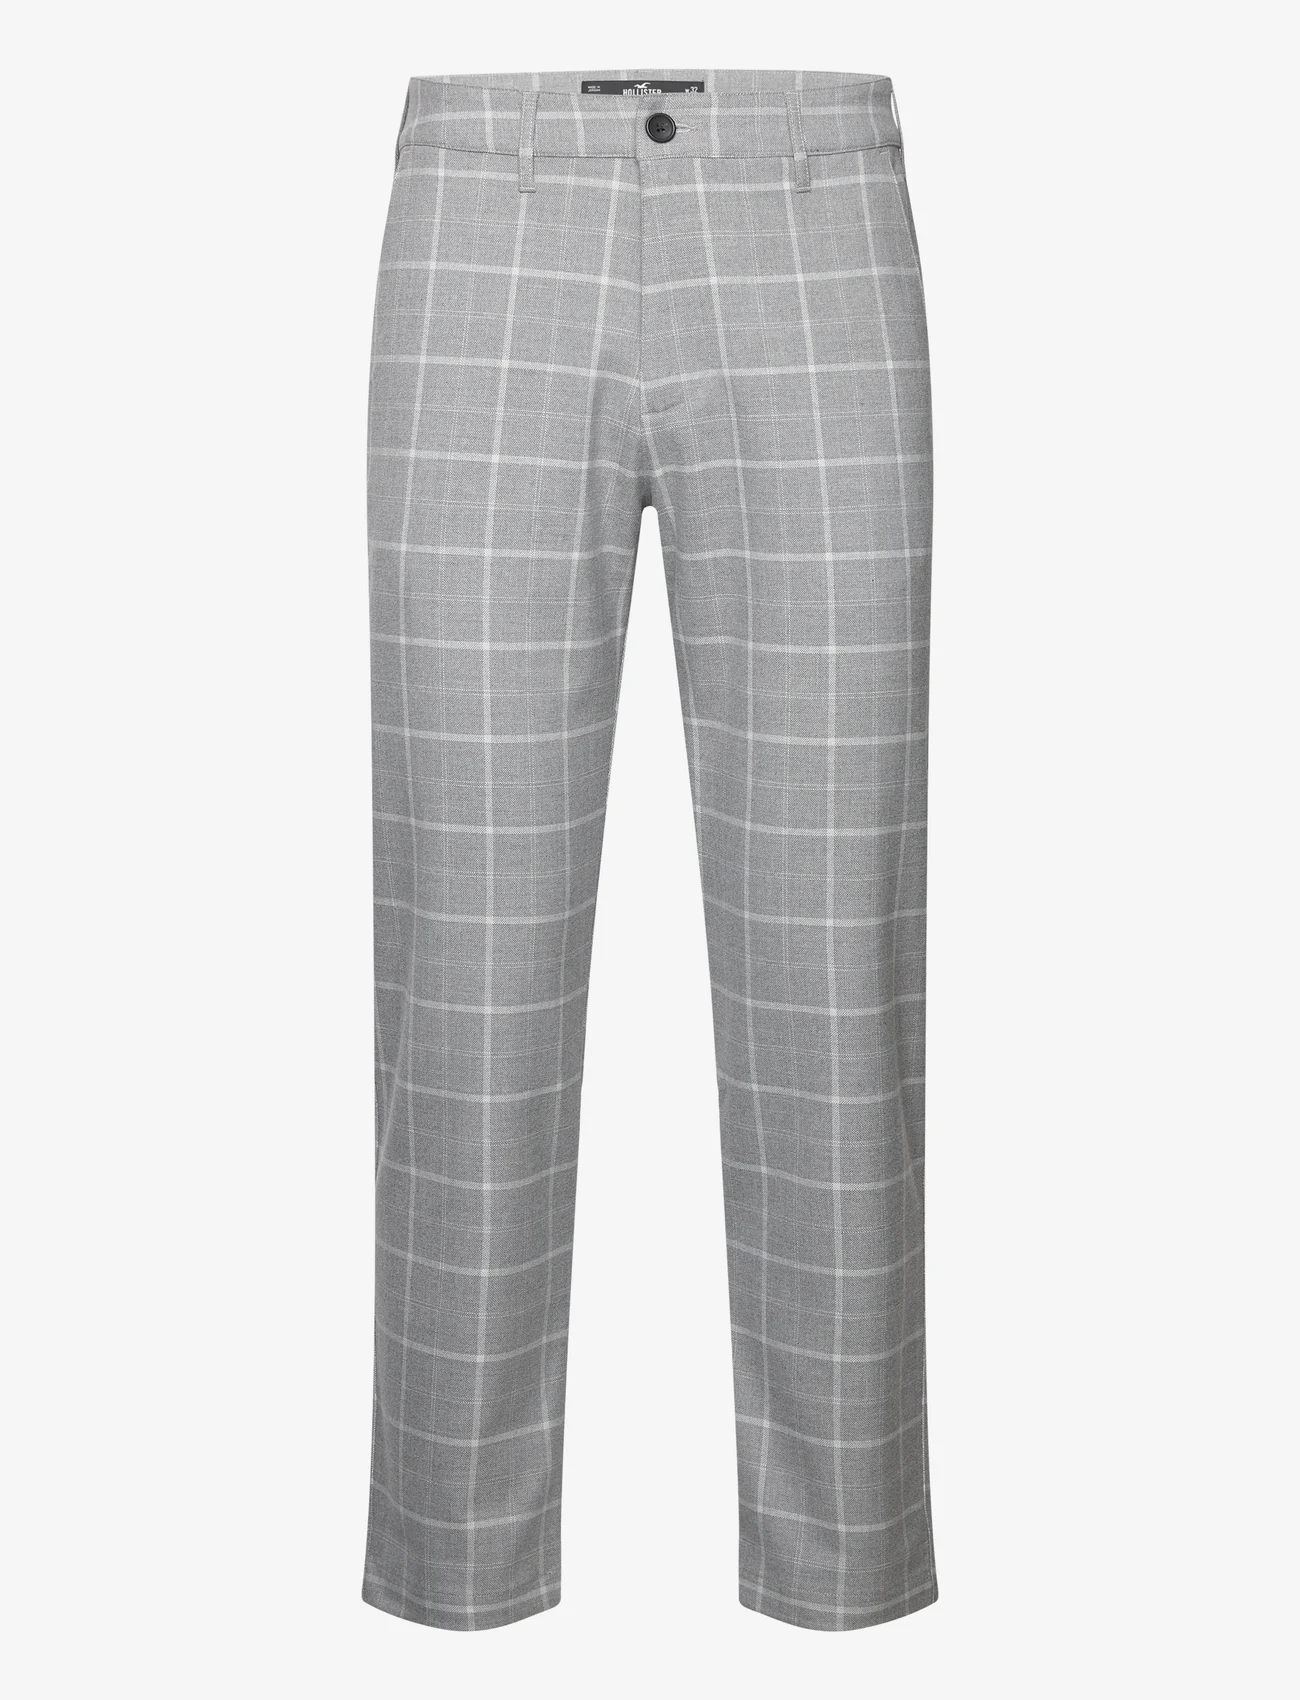 Hollister - HCo. GUYS PANTS - kostymbyxor - grey plaid - 0